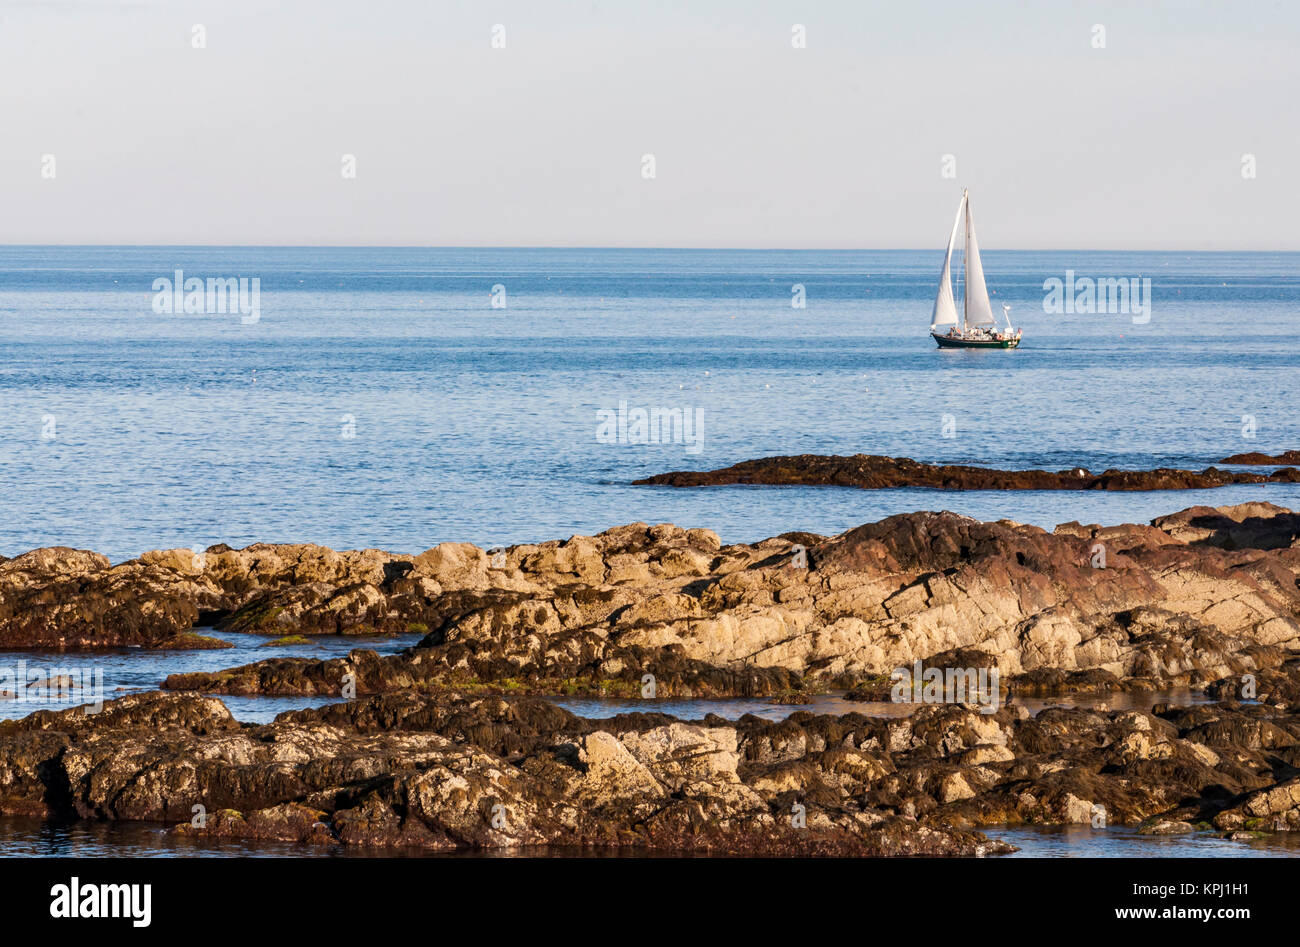 Sailing near coast of Atlantic ocean in Maine, USA Stock Photo